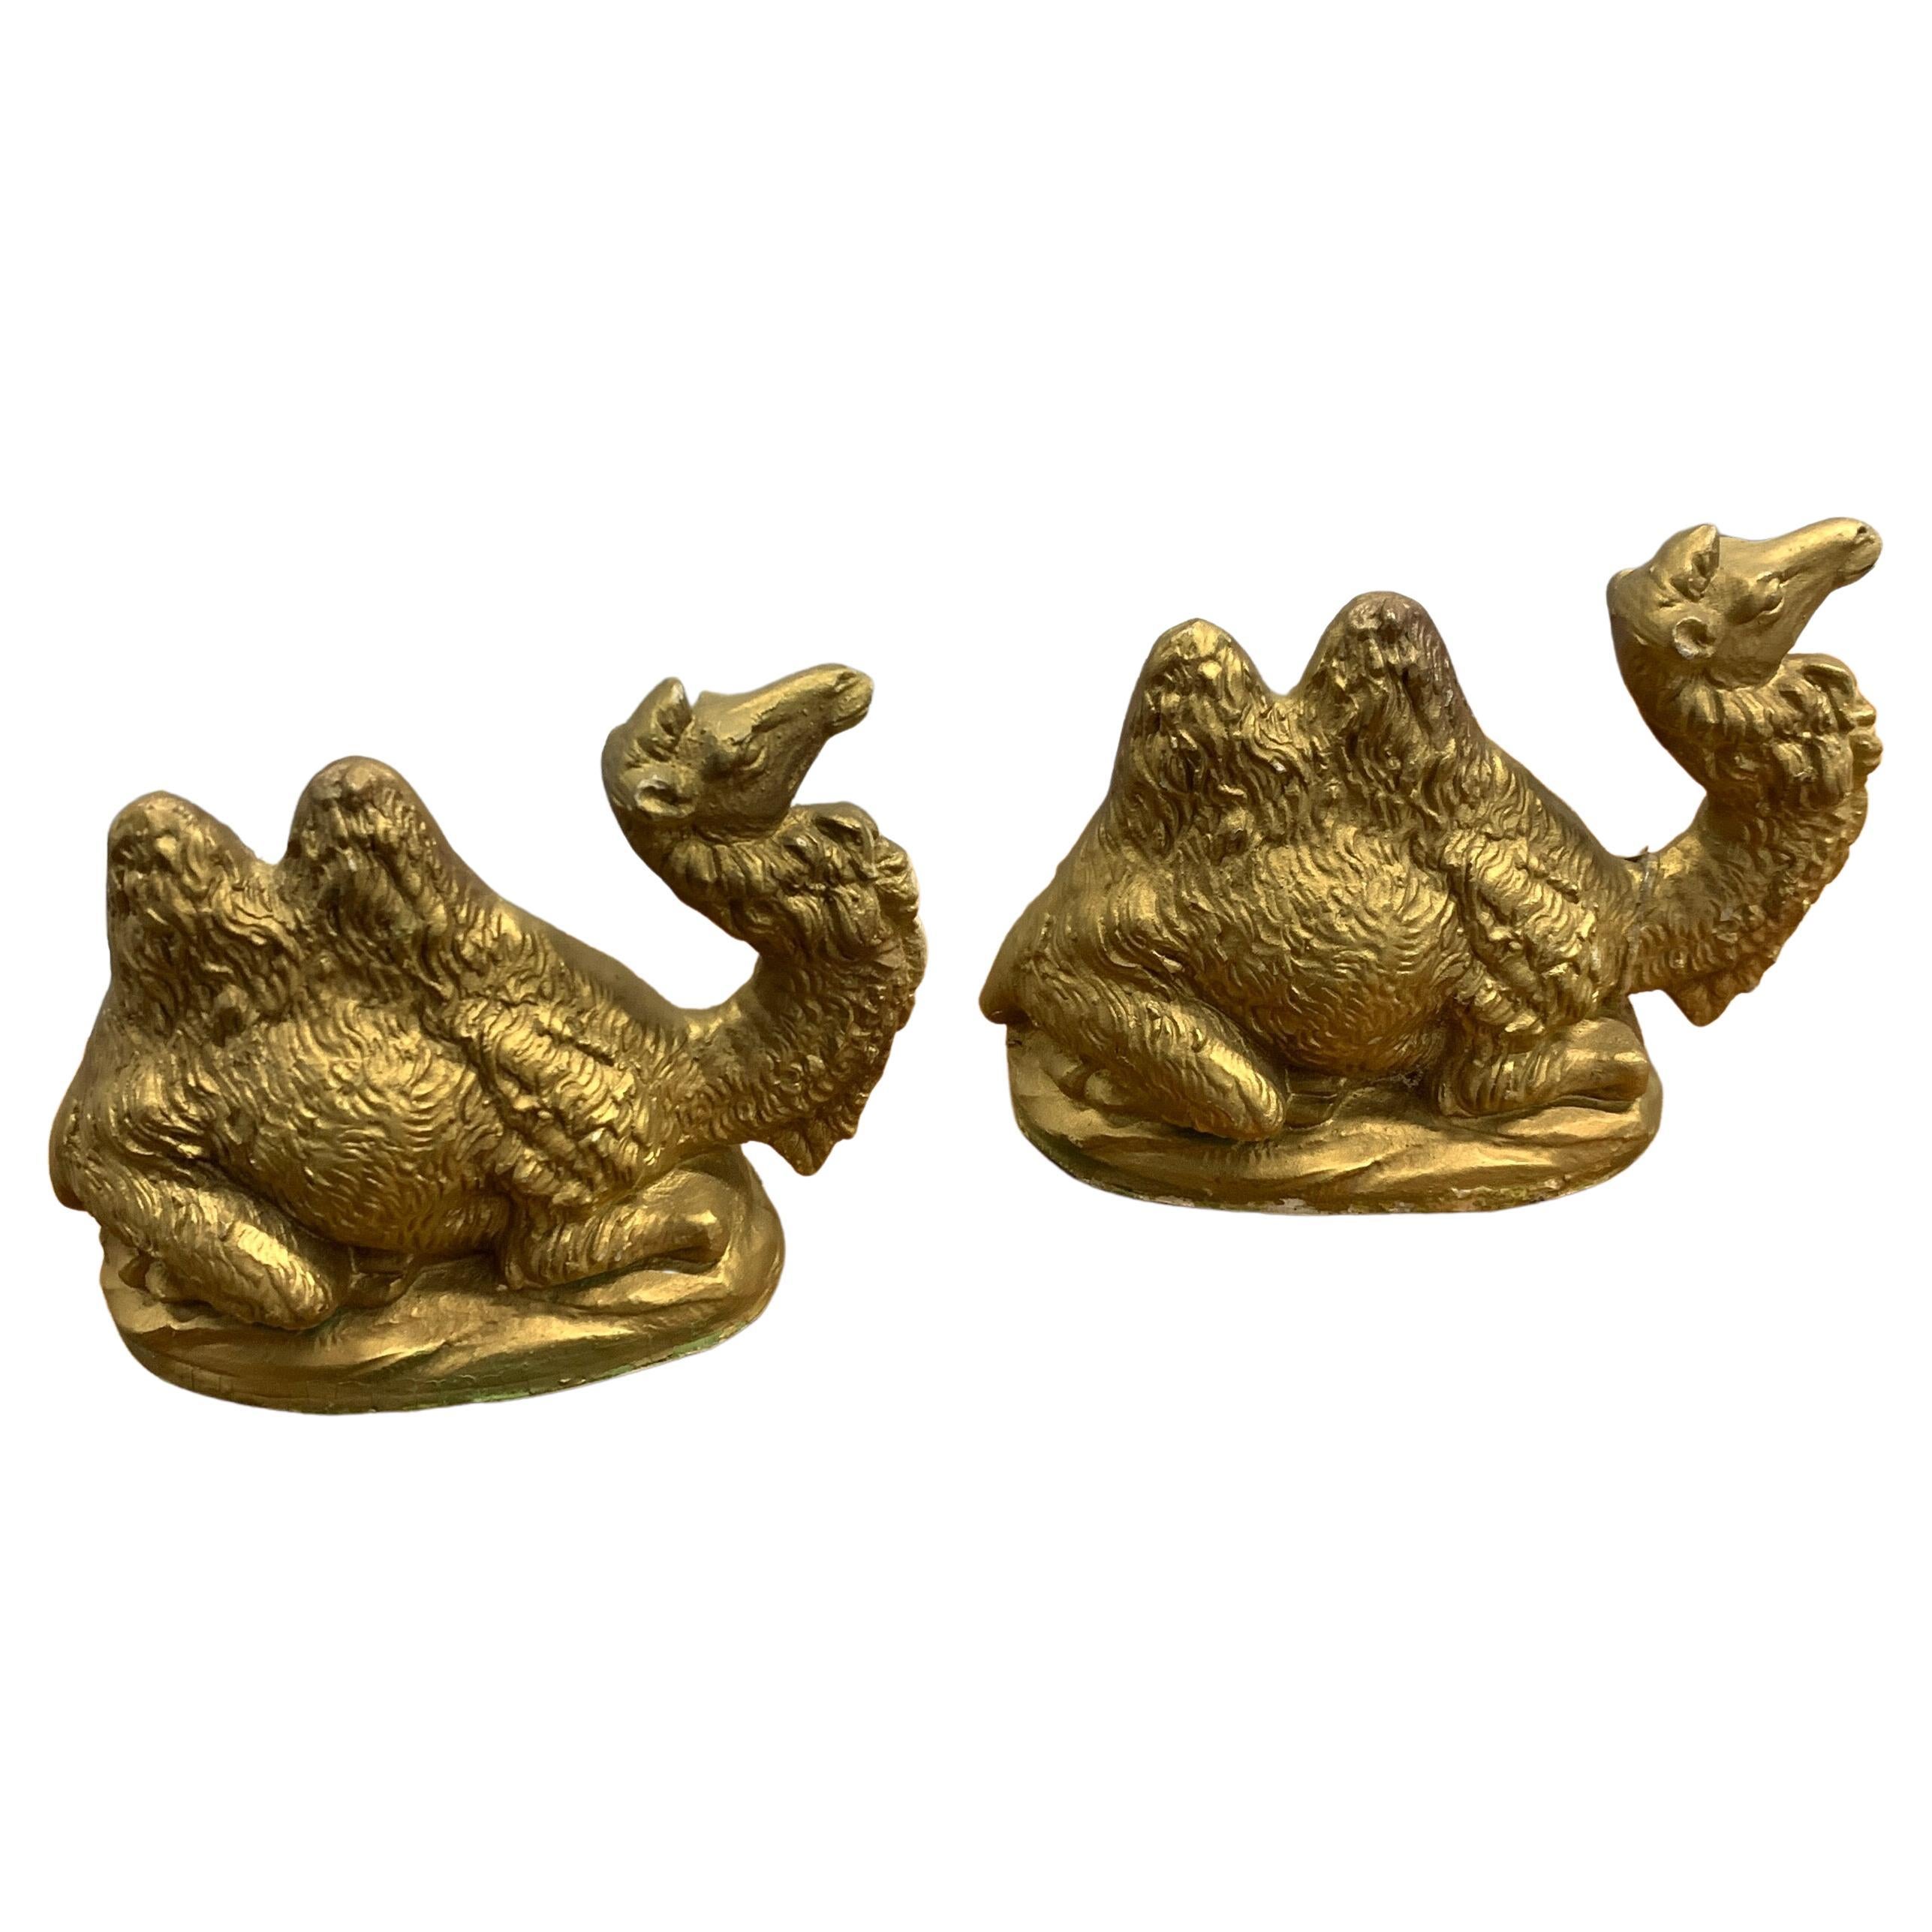 Vintage Italian Gold Gilt Camel Figures, a Pair For Sale